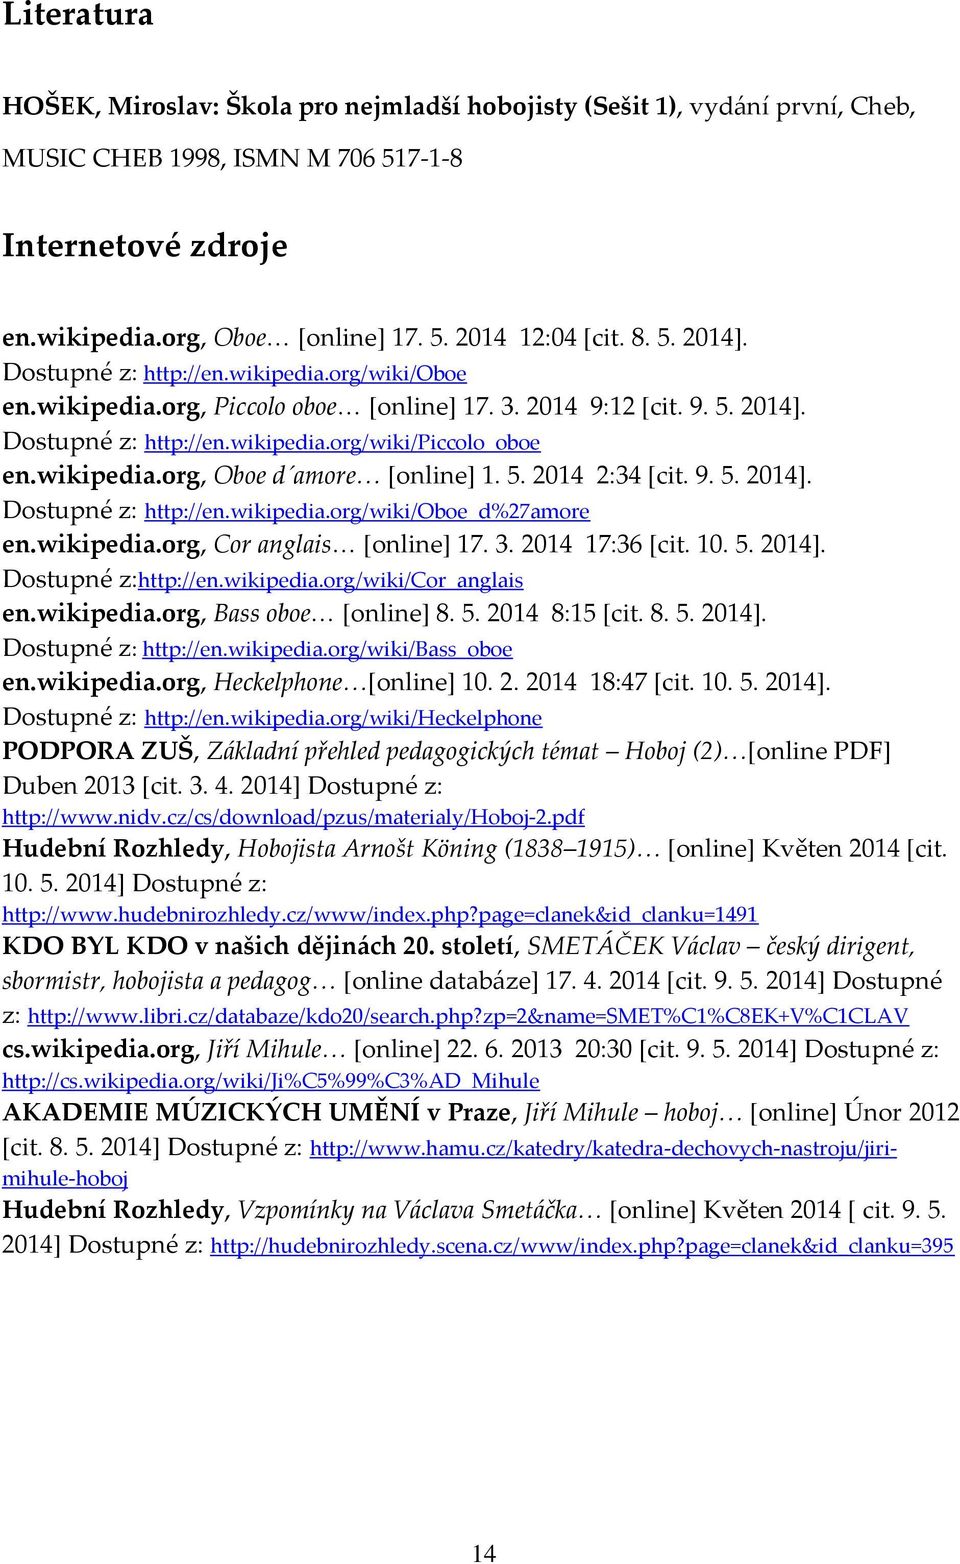 wikipedia.org, Oboe d amore [online] 1. 5. 2014 2:34 [cit. 9. 5. 2014]. Dostupné z: http://en.wikipedia.org/wiki/oboe_d%27amore en.wikipedia.org, Cor anglais [online] 17. 3. 2014 17:36 [cit. 10. 5. 2014]. Dostupné z:http://en.